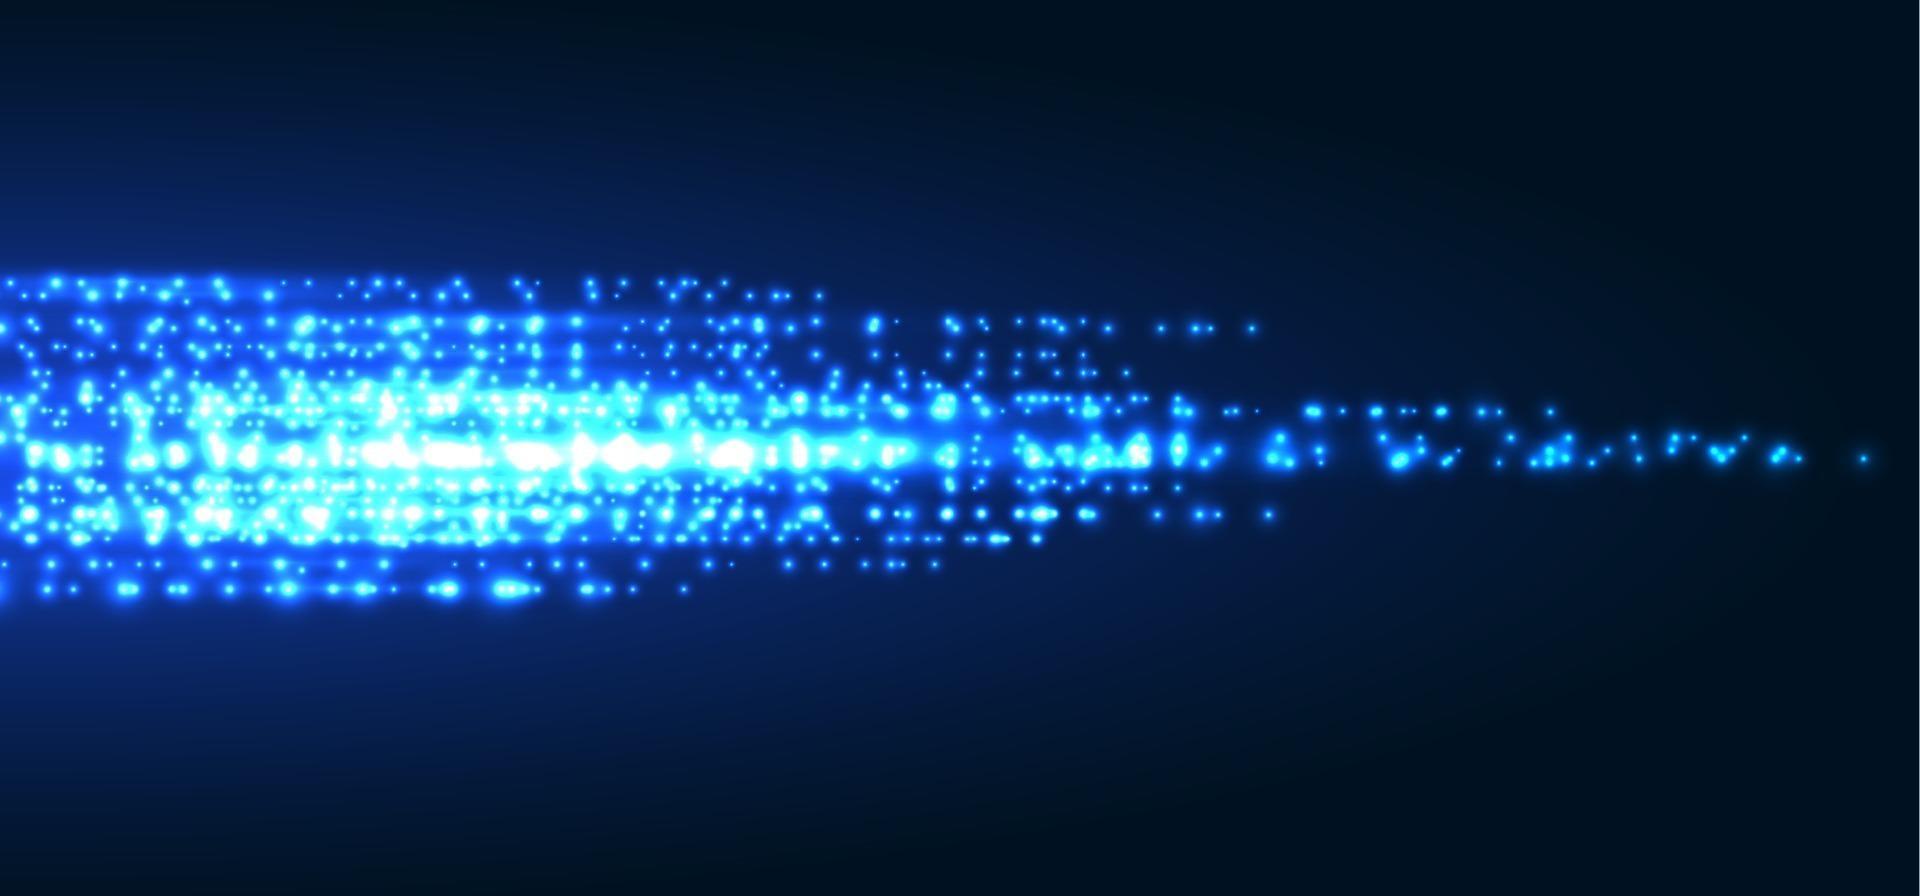 abstracte technologie futuristische blauwe magische deeltjes lijnen licht sprankelend glitter op donkere achtergrond. vector